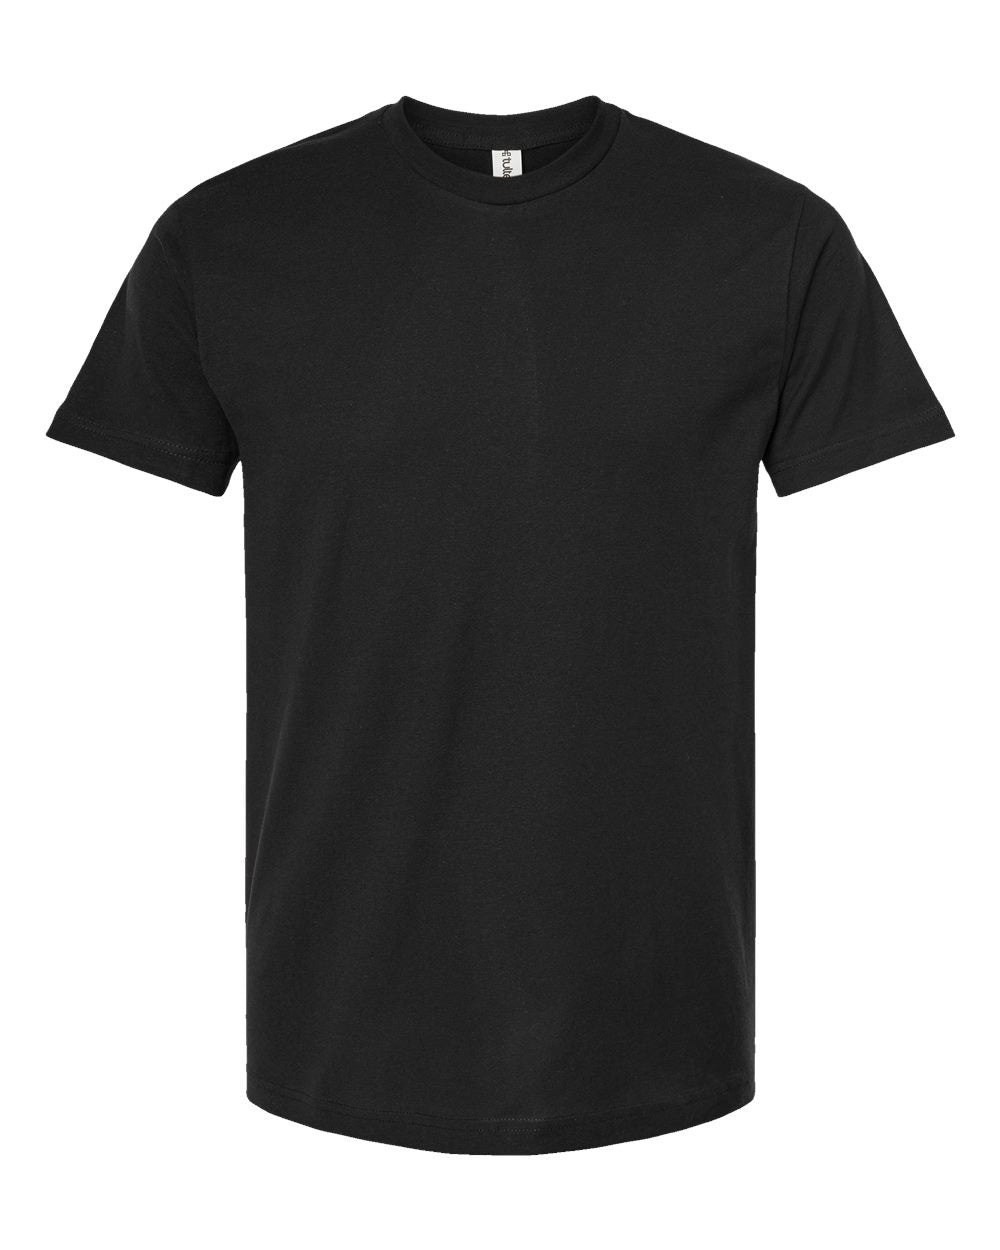 SPECIAL BUY - Basic Cotton T-Shirt w/ Custom 1-2 color logo (144pc Minimum)